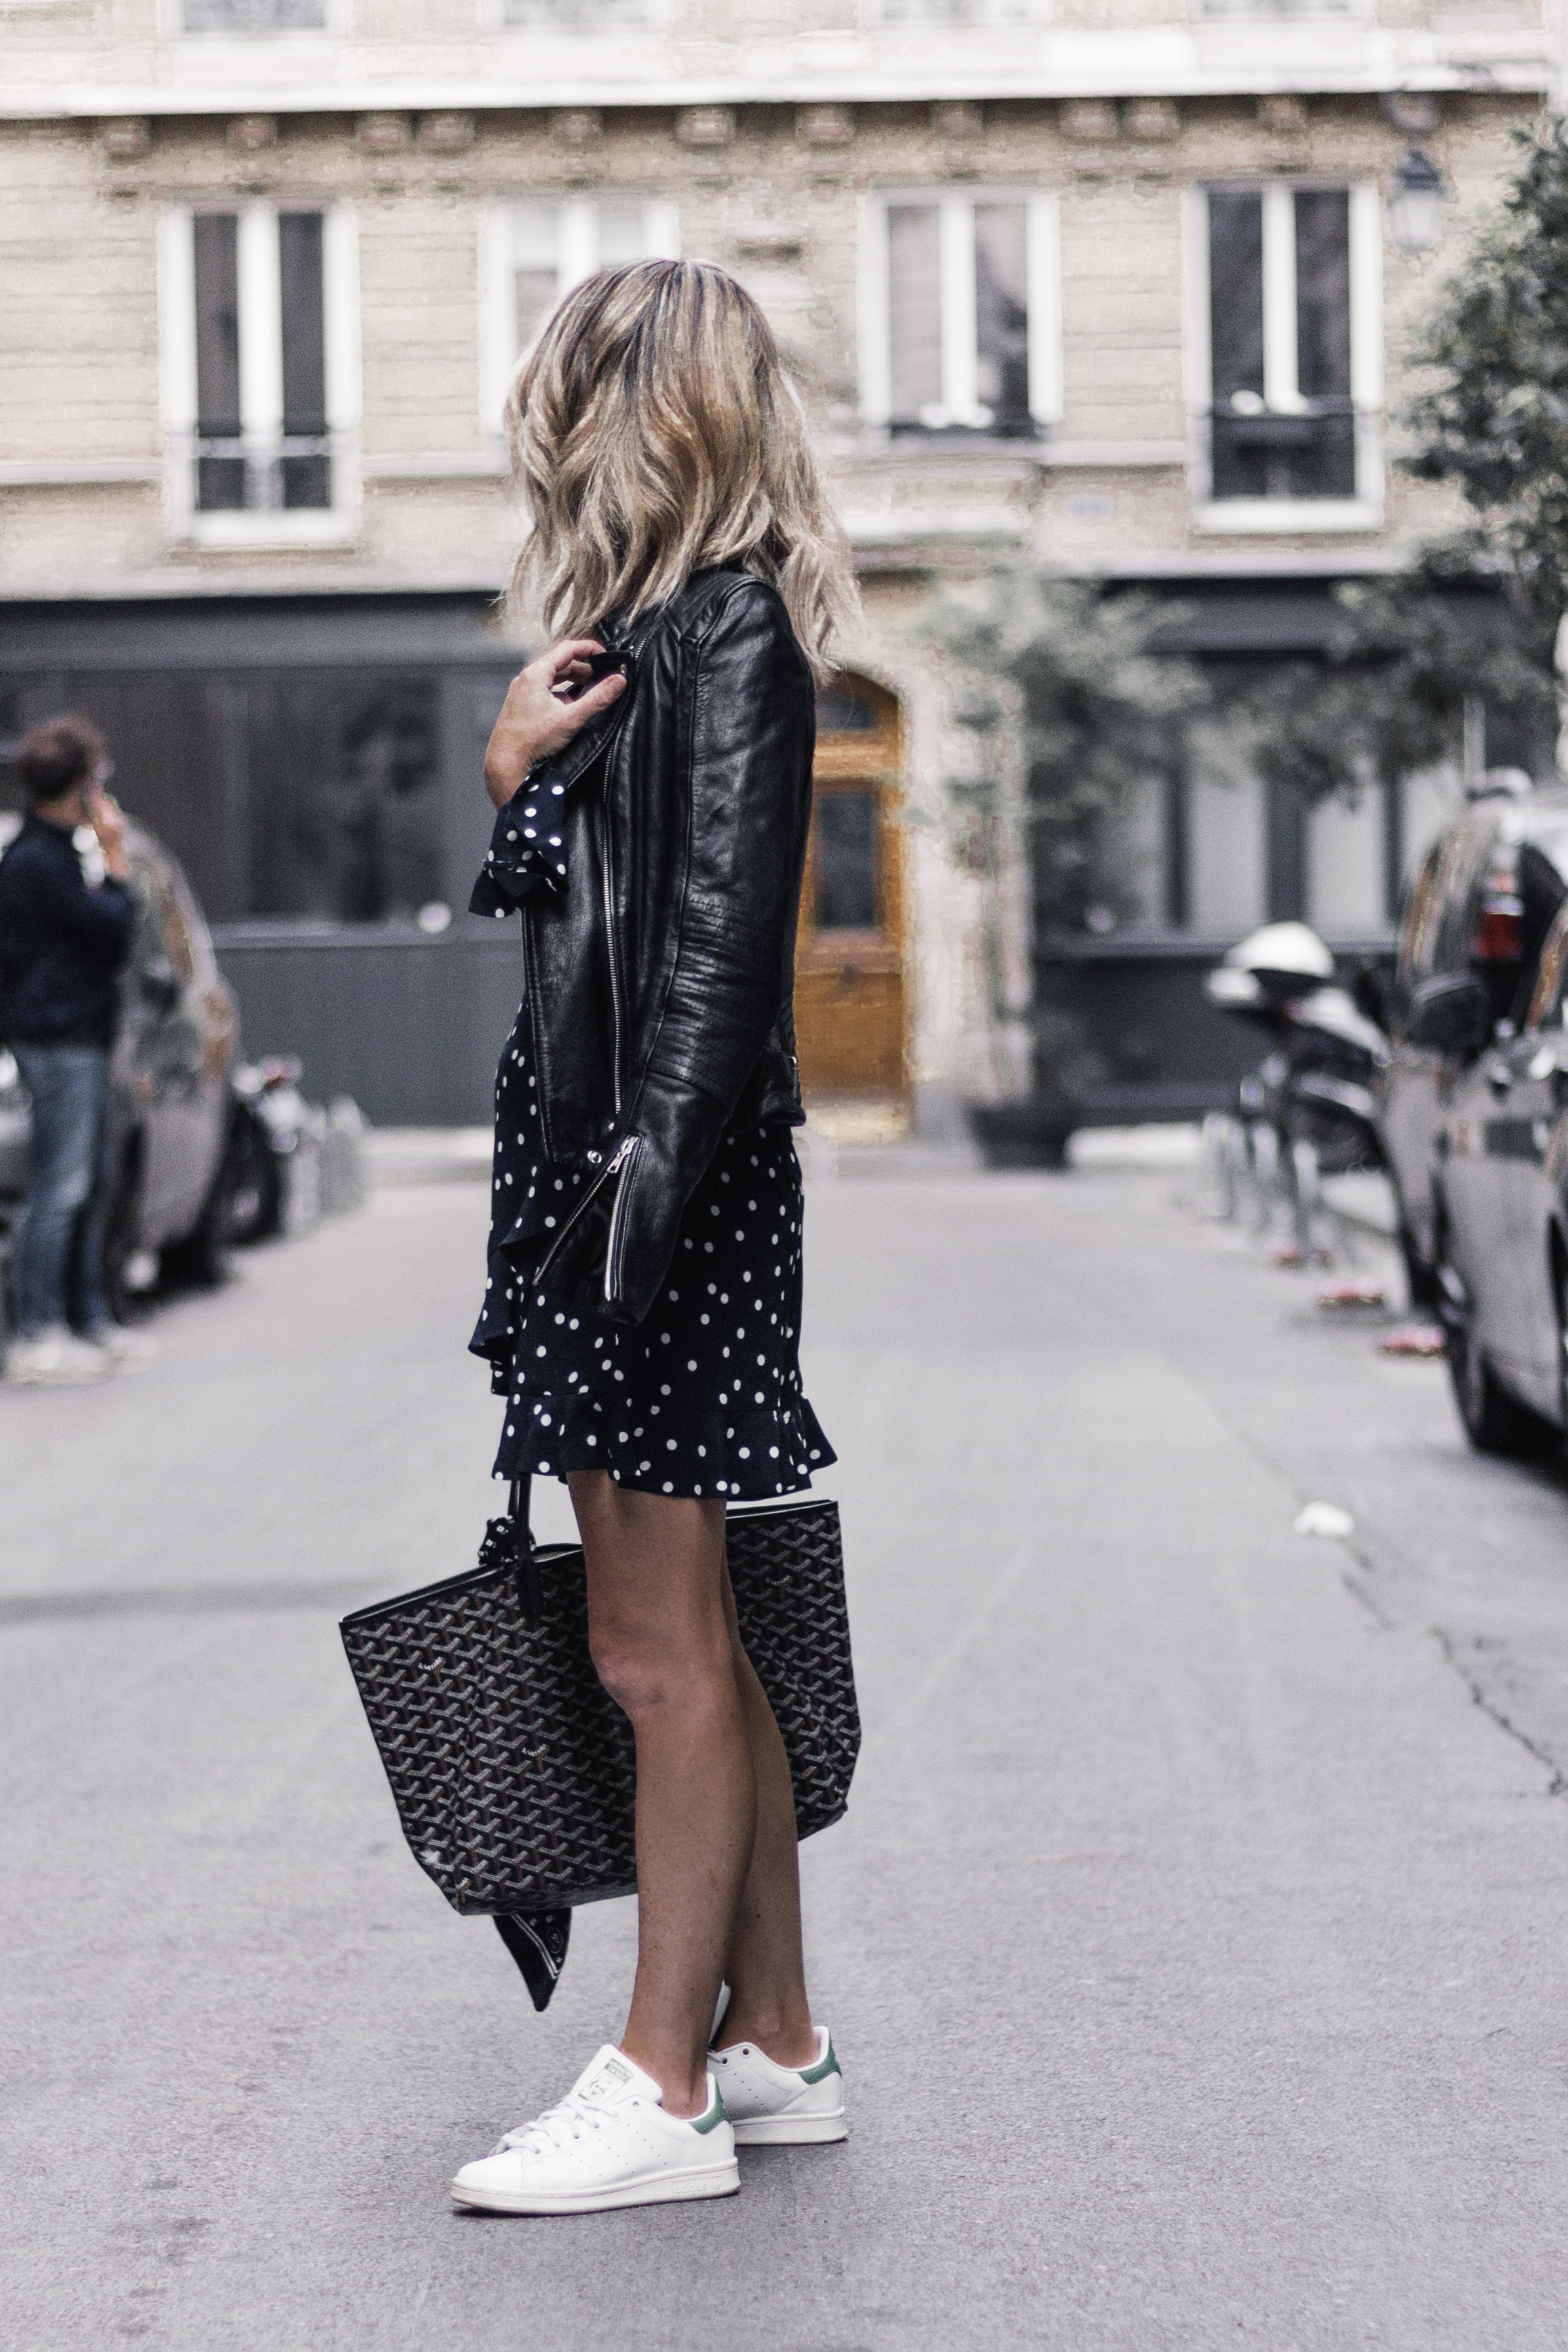 polka dot dress with leather jacket